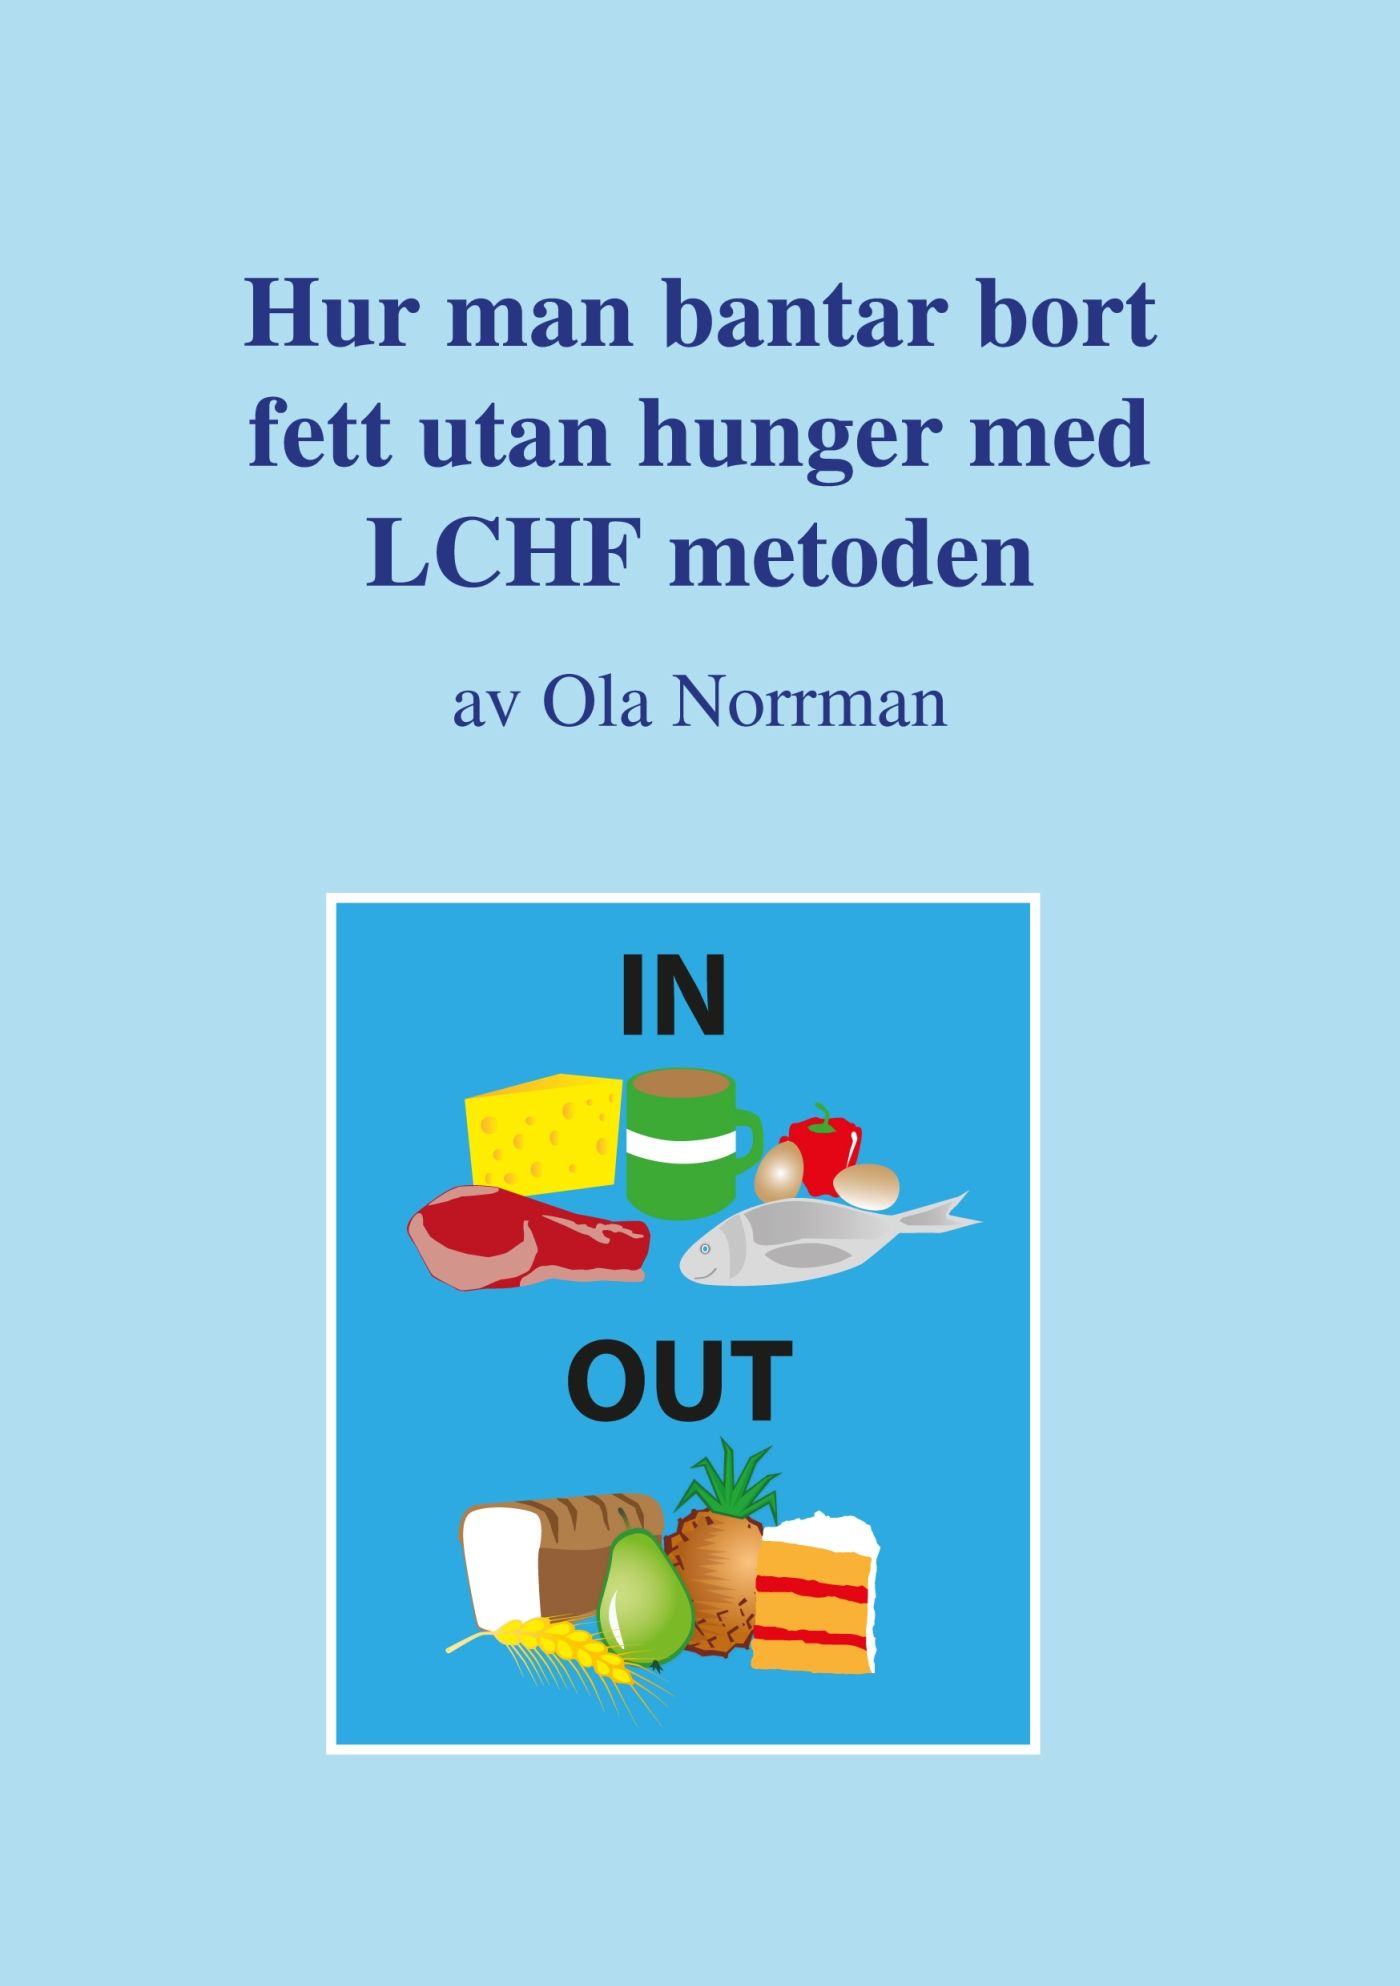 Hur man bantar bort fett utan hunger med LCHF metoden, e-bog af Ola Norrman